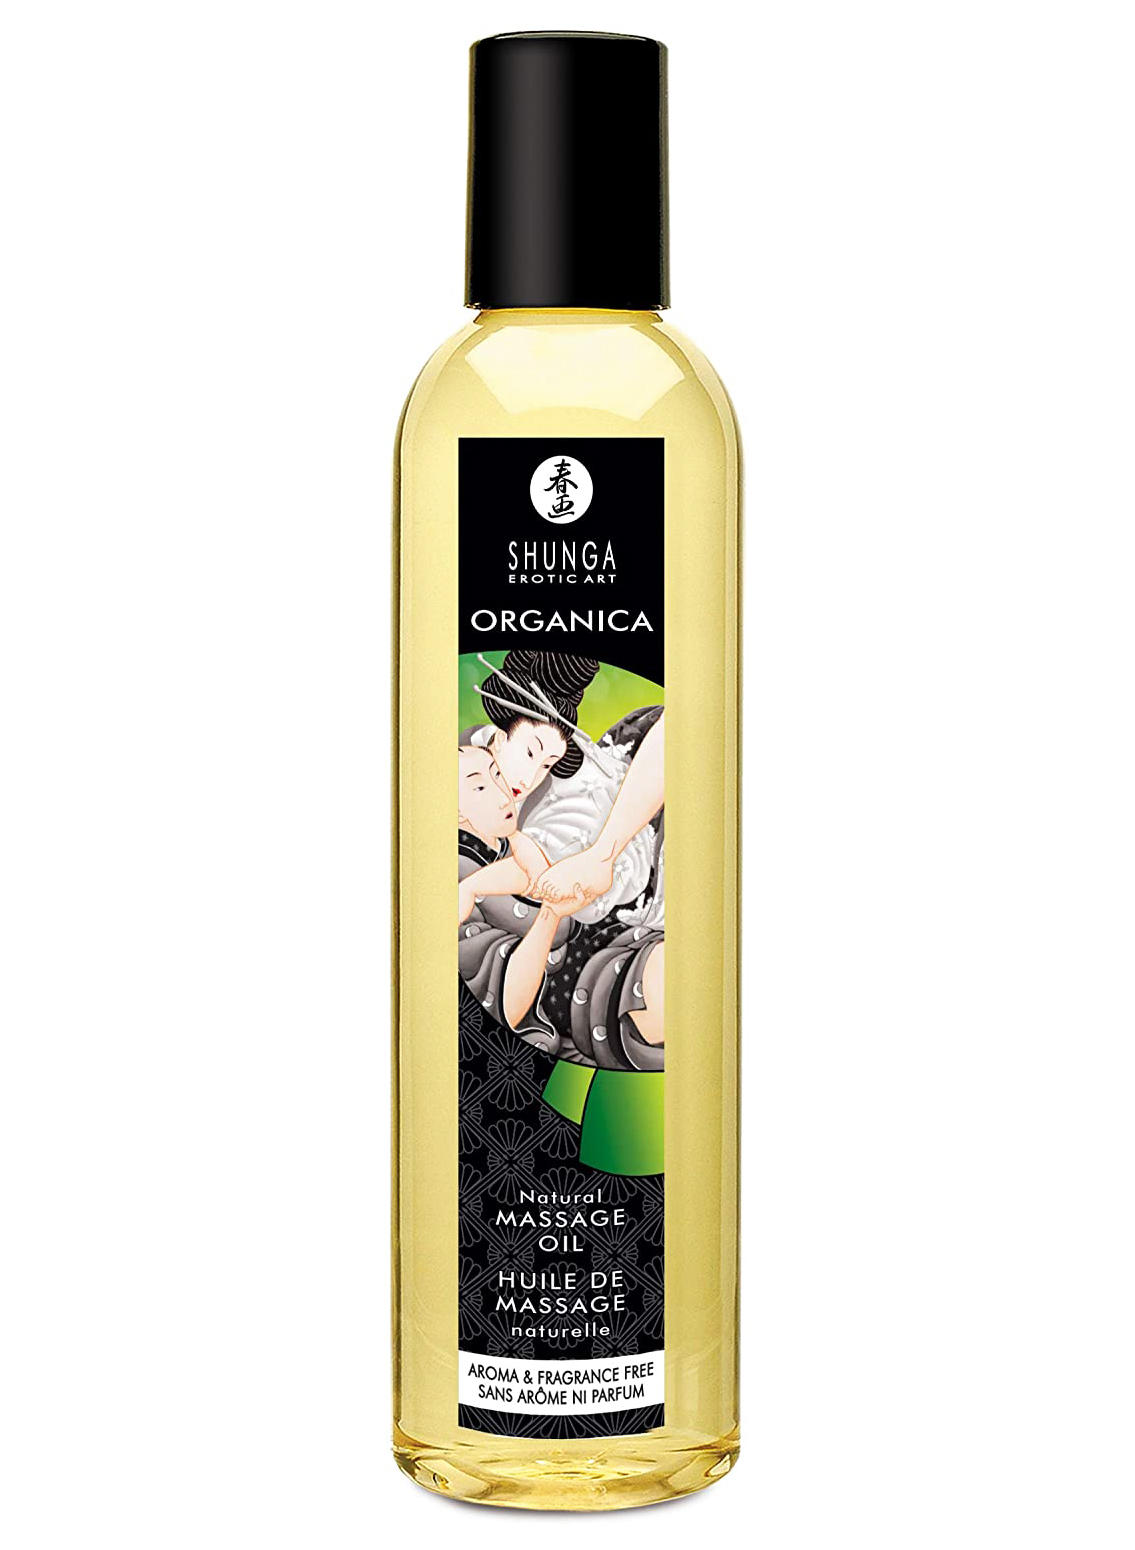 Shunga Organica Massage Oil Natural free aroma